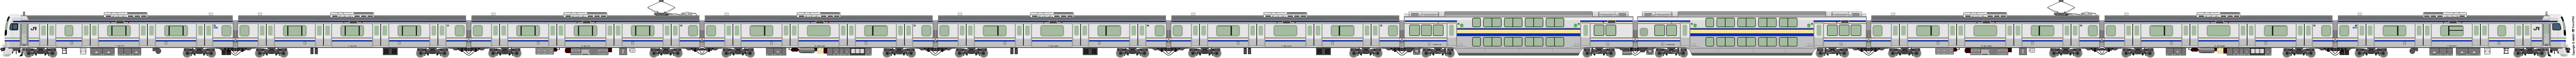 5018 - [5018] East Japan Railway 52161582402_2de5e231d6_o